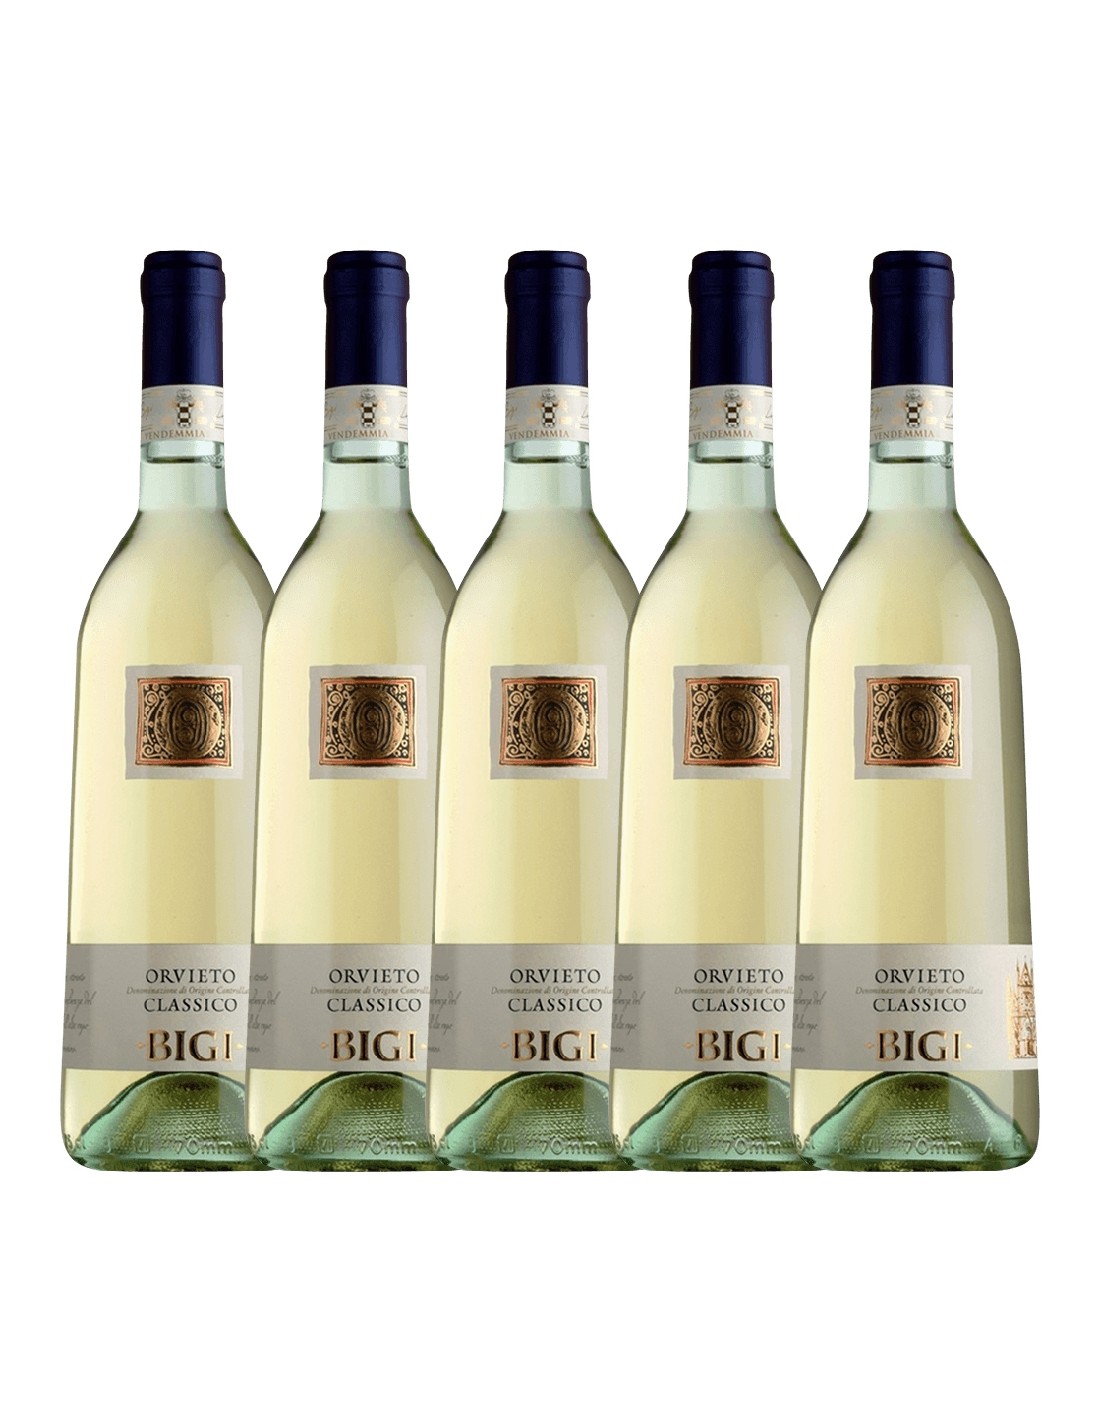 Pachet 5 sticle Vin alb, Cupaj, Bigi Orvieto, 0.75L, 12.5% alc., Italia